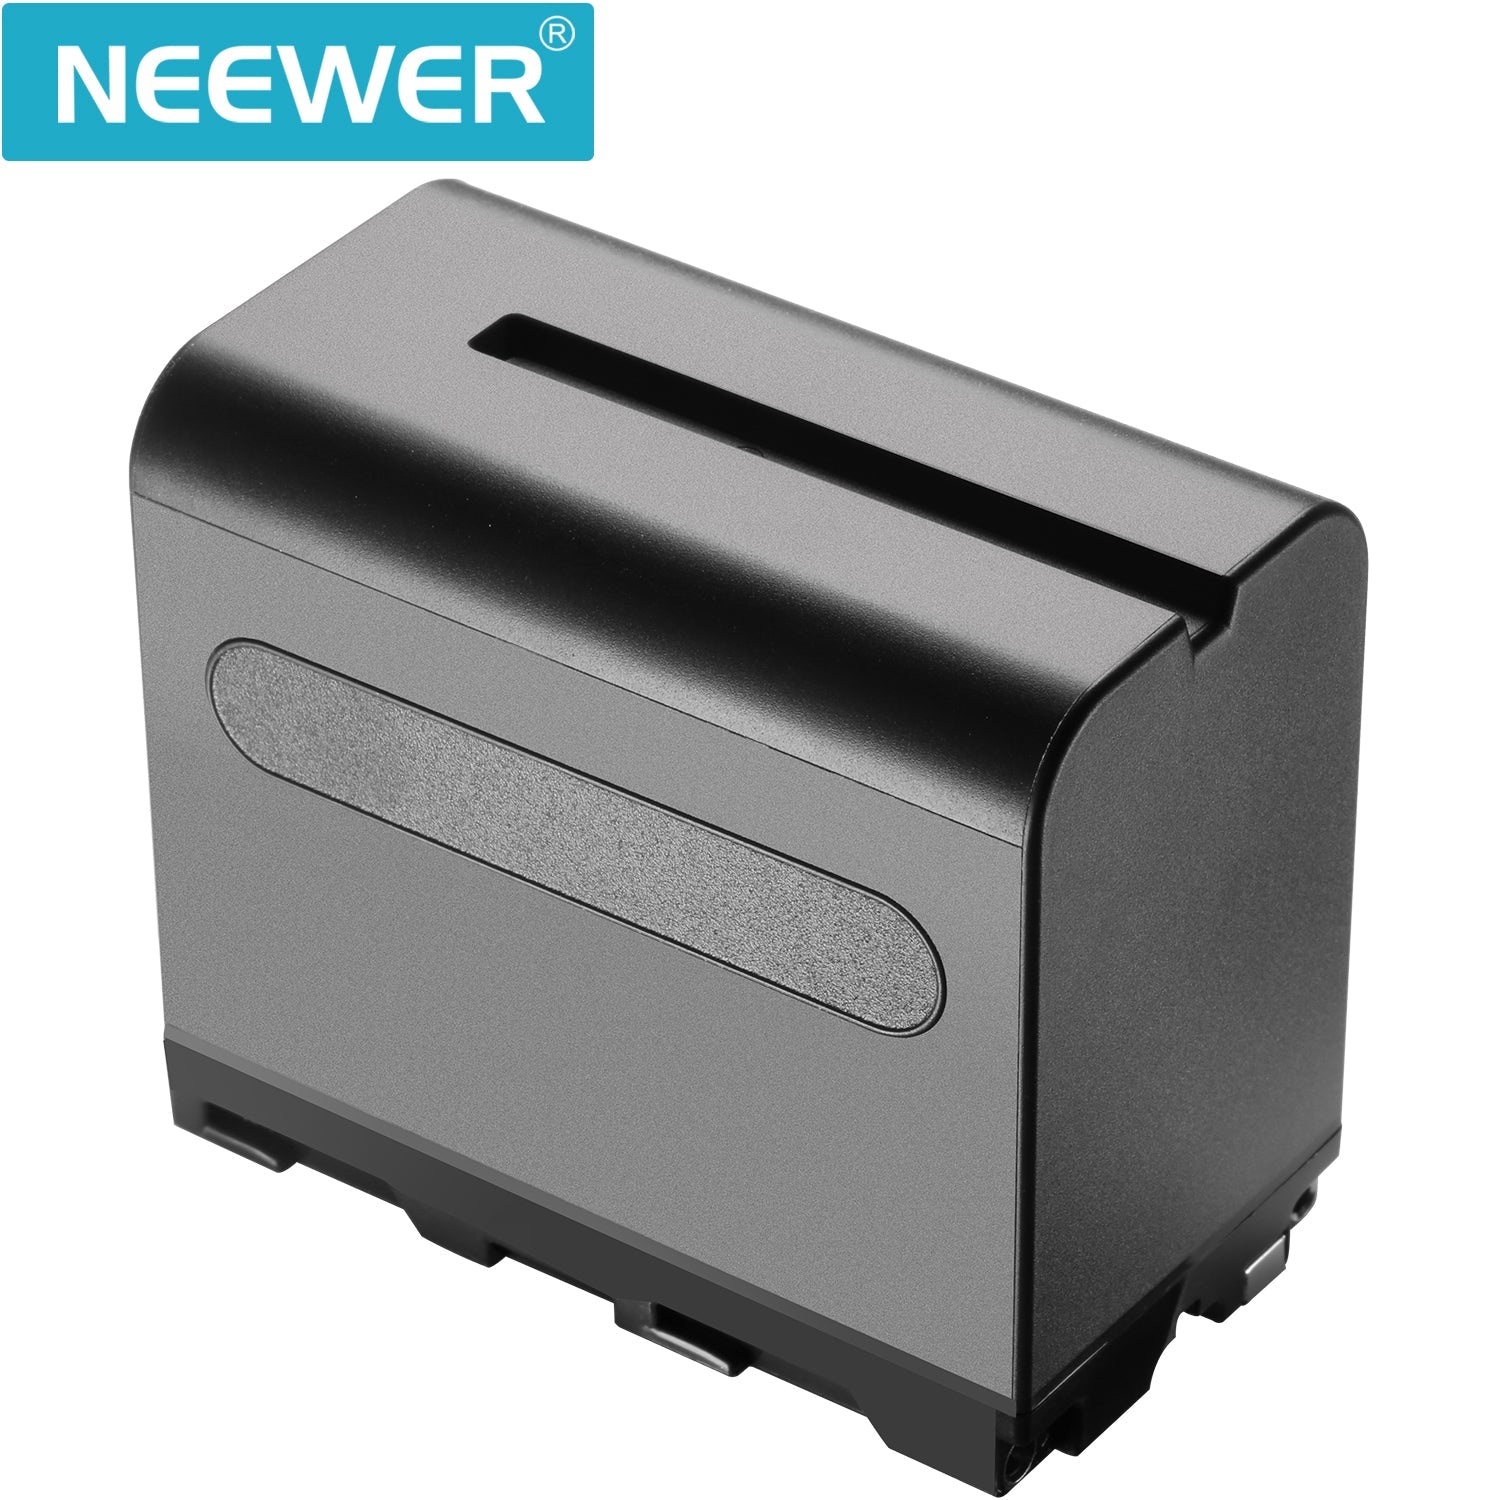 NEEWER NP-F970 6600mAh リチウムイオンバッテリー 交換用バッテリーSony用- NEEWER – NEEWER.JP